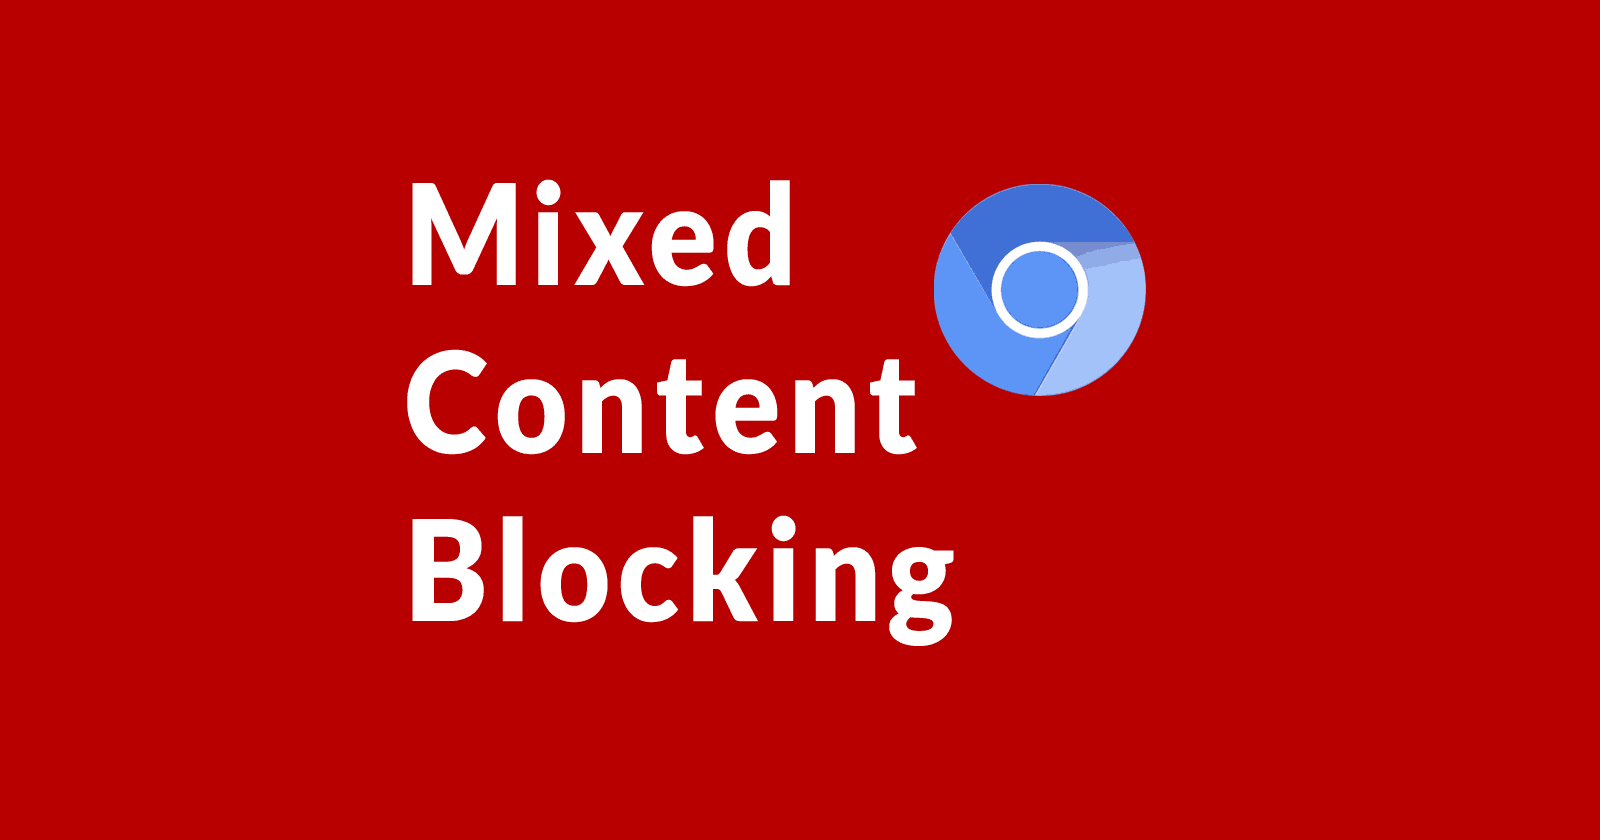 Chrome mixed content blocking